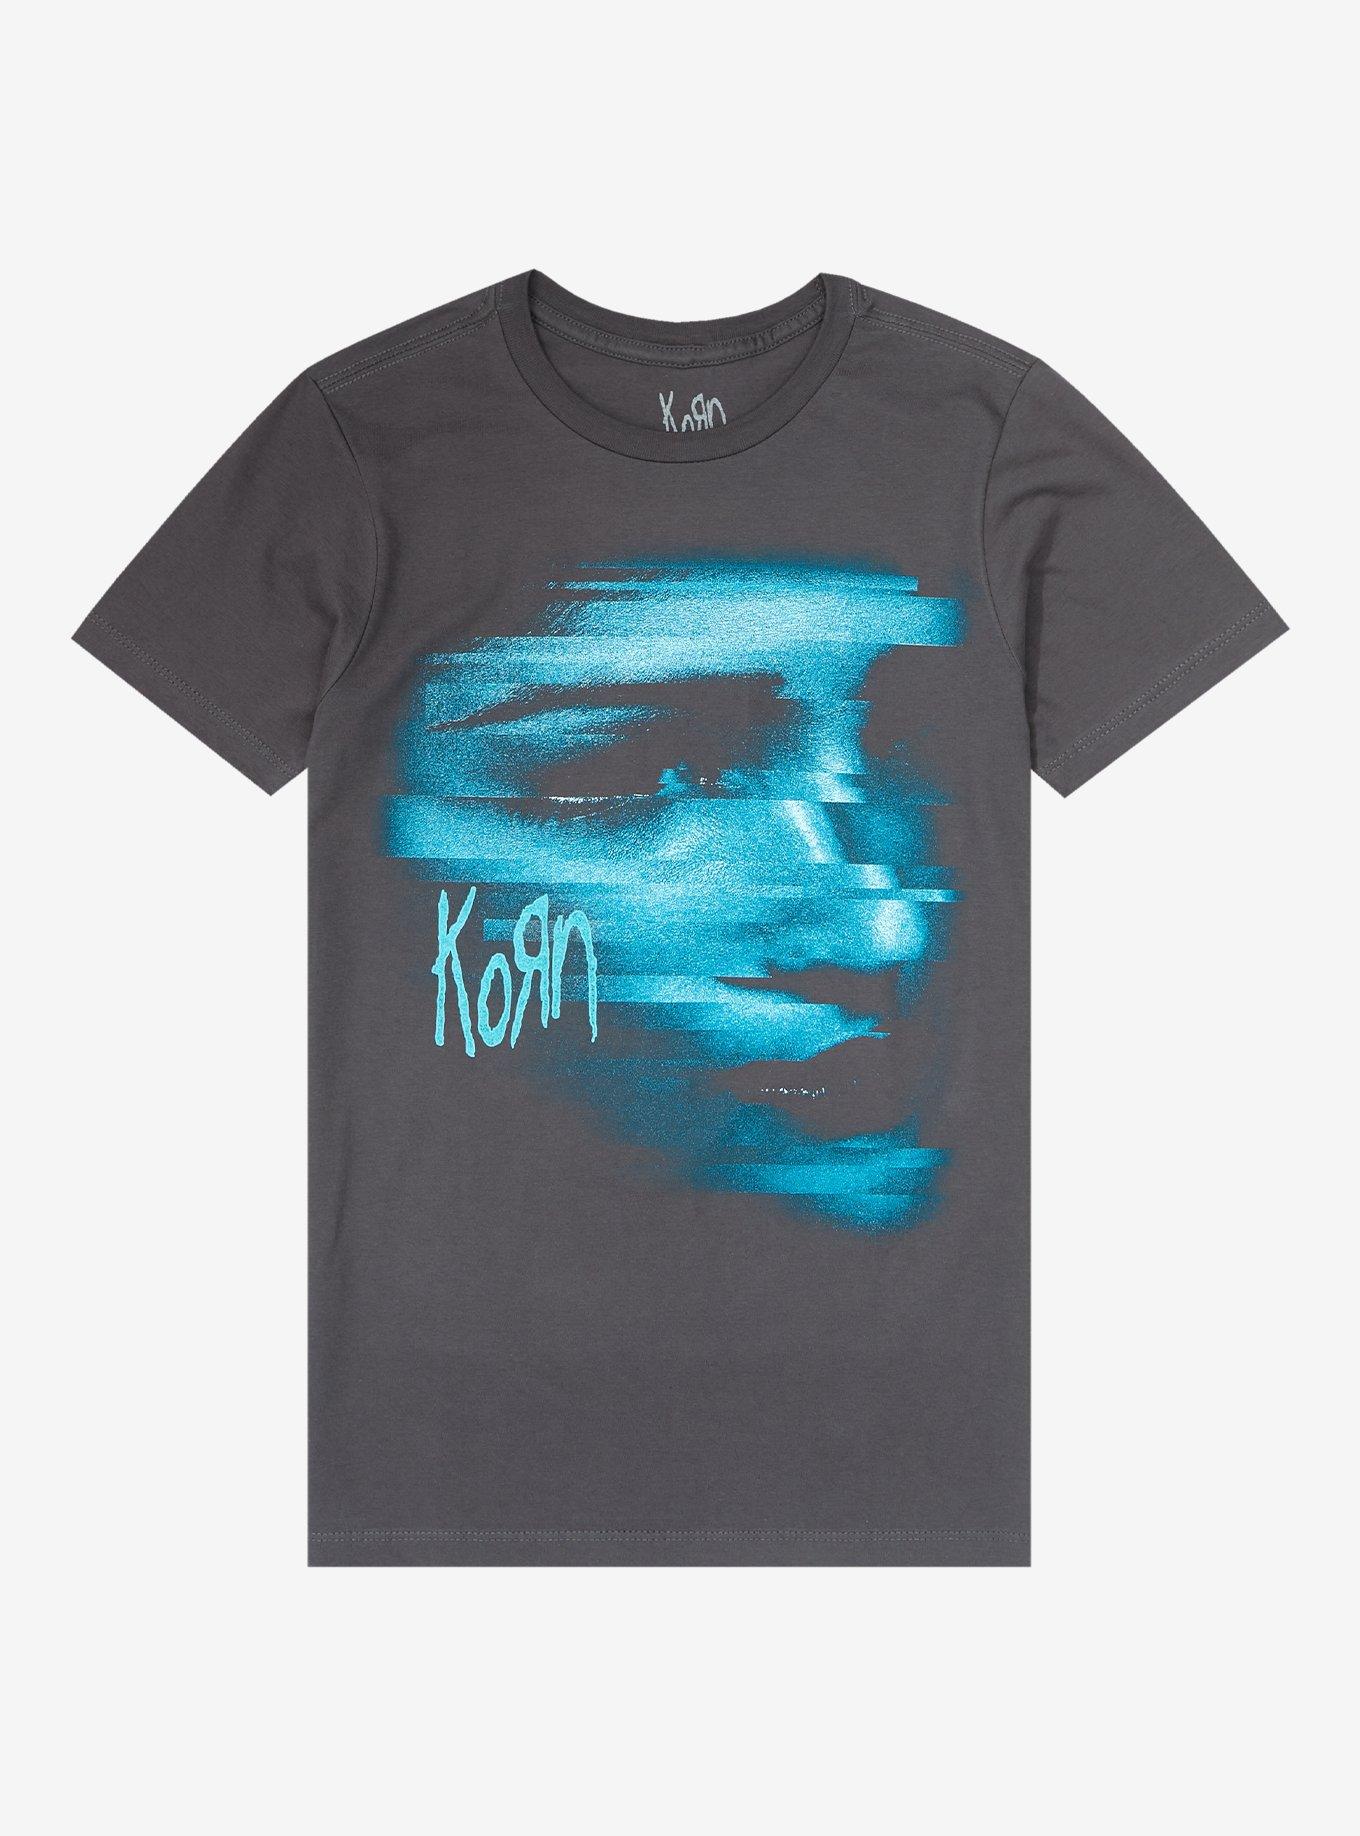 Korn Blurry Face Boyfriend Fit Girls T-Shirt, BLACK, hi-res